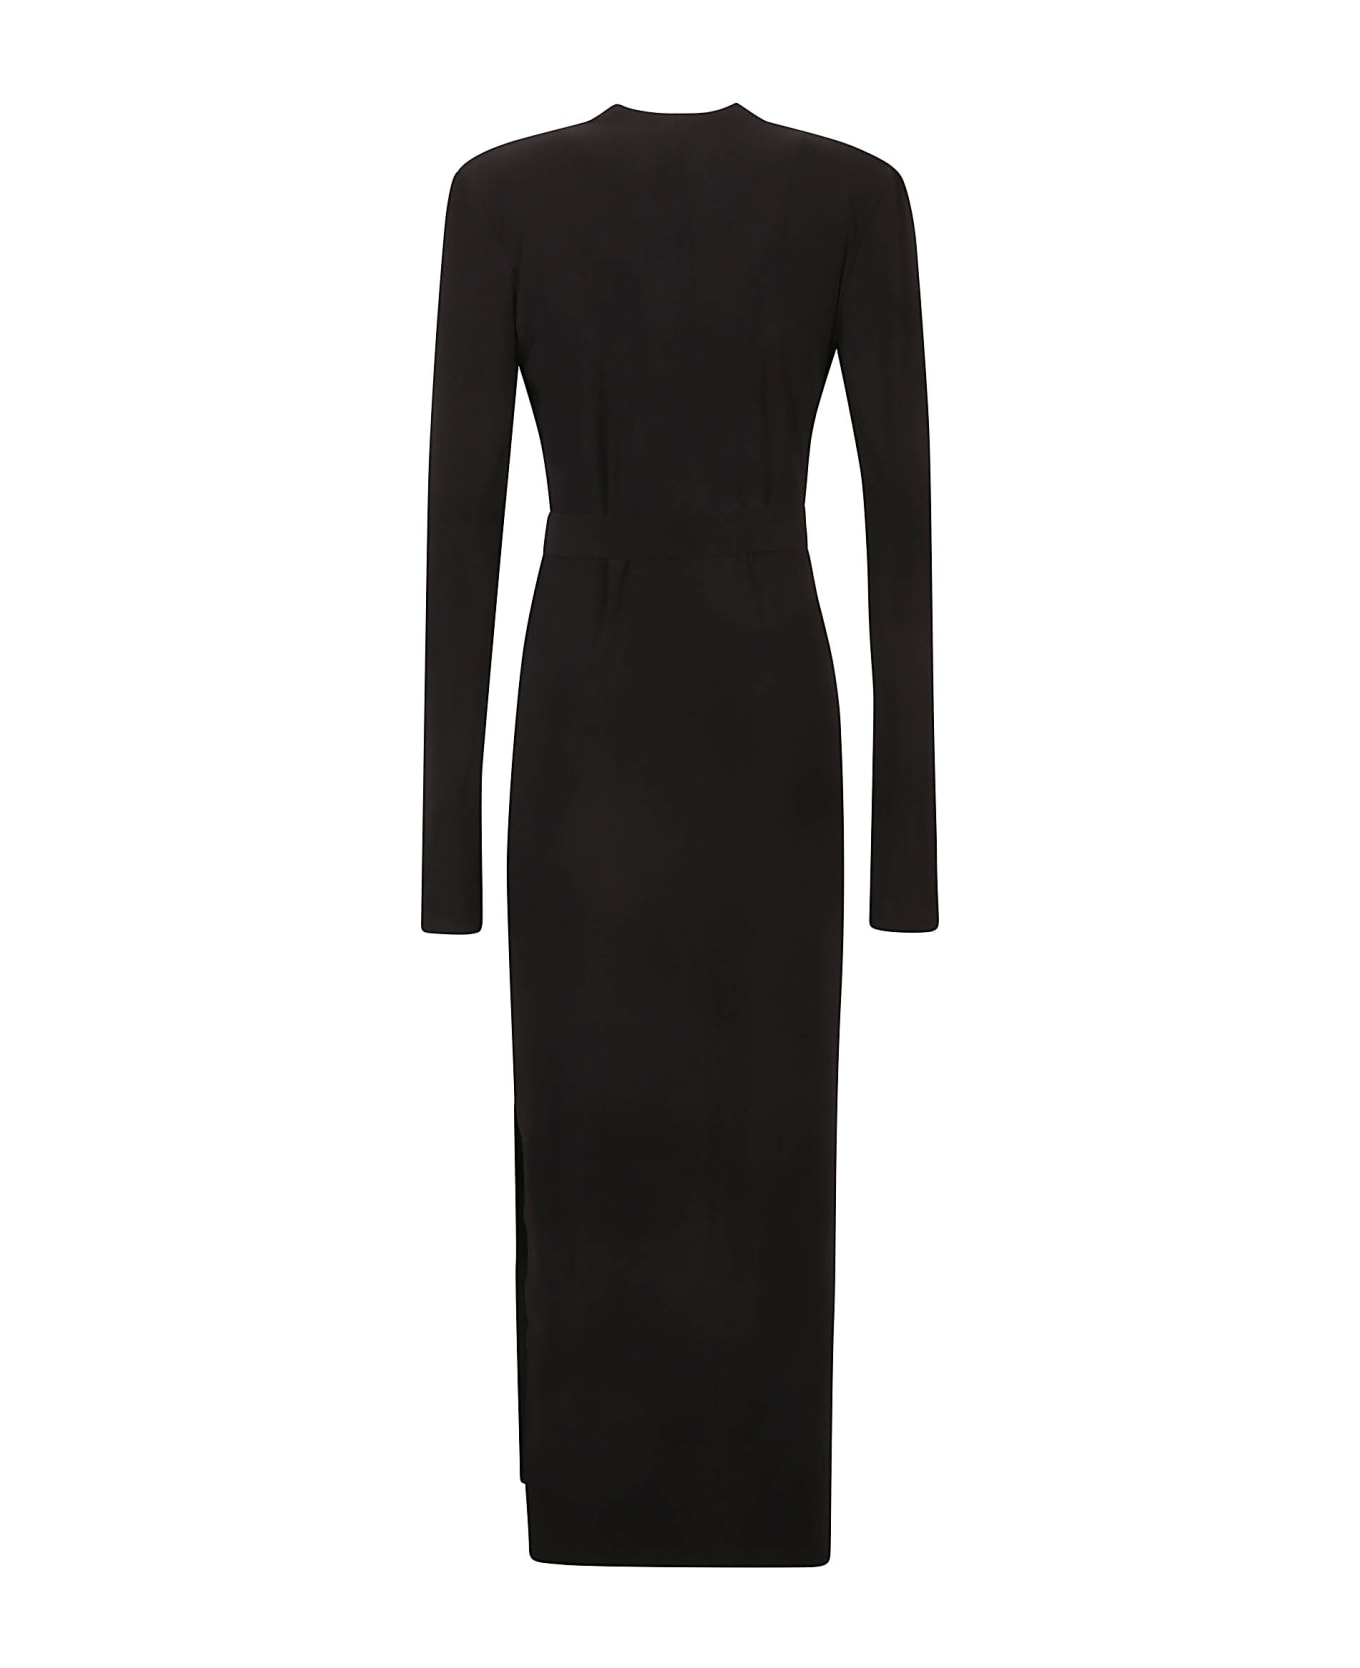 Norma Kamali Long Sleeve U Neck Side Slit Dress - Black